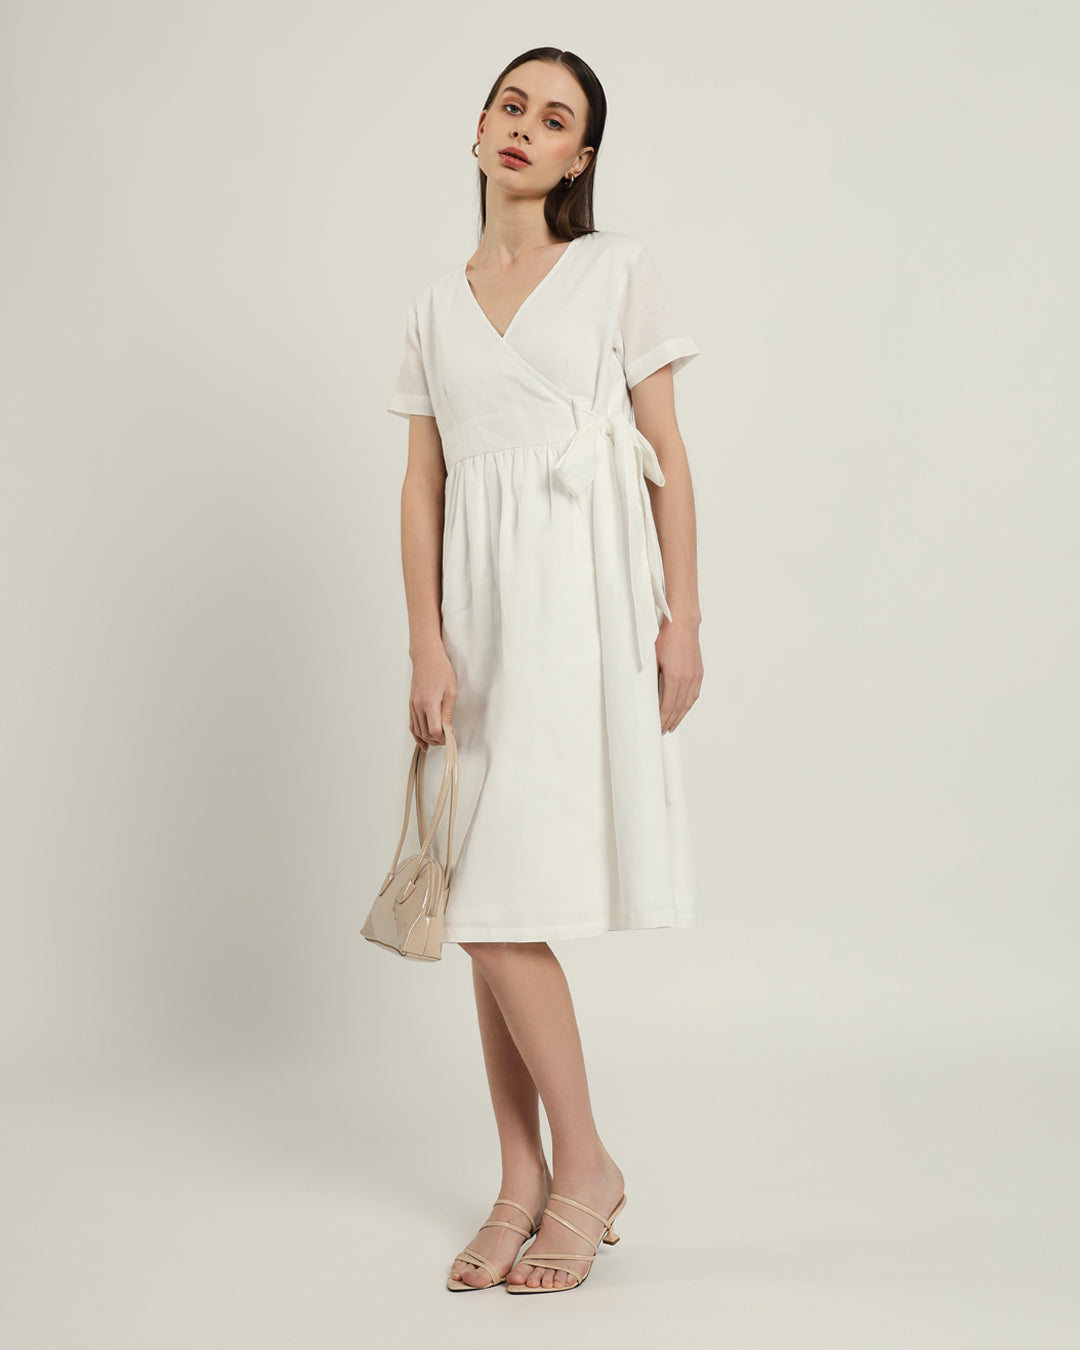 The Miyoshi Daisy White Linen Dress